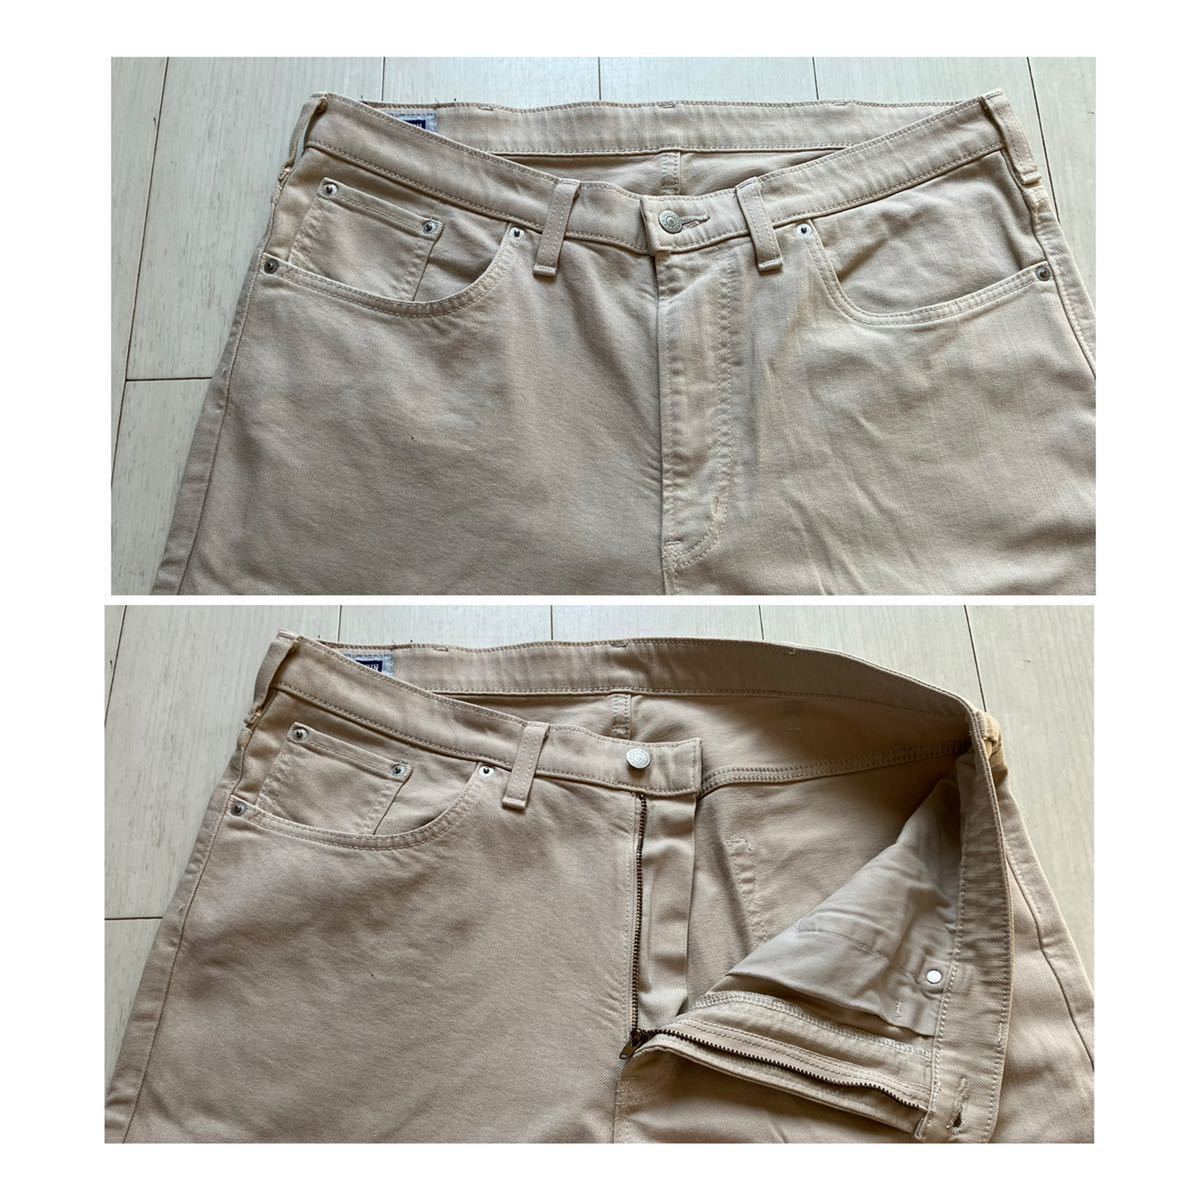  prompt decision W38 Edwin EDWIN S403 SOFT-FLEX soft soft jeans beige group color made in Japan Inter National Basic strut 